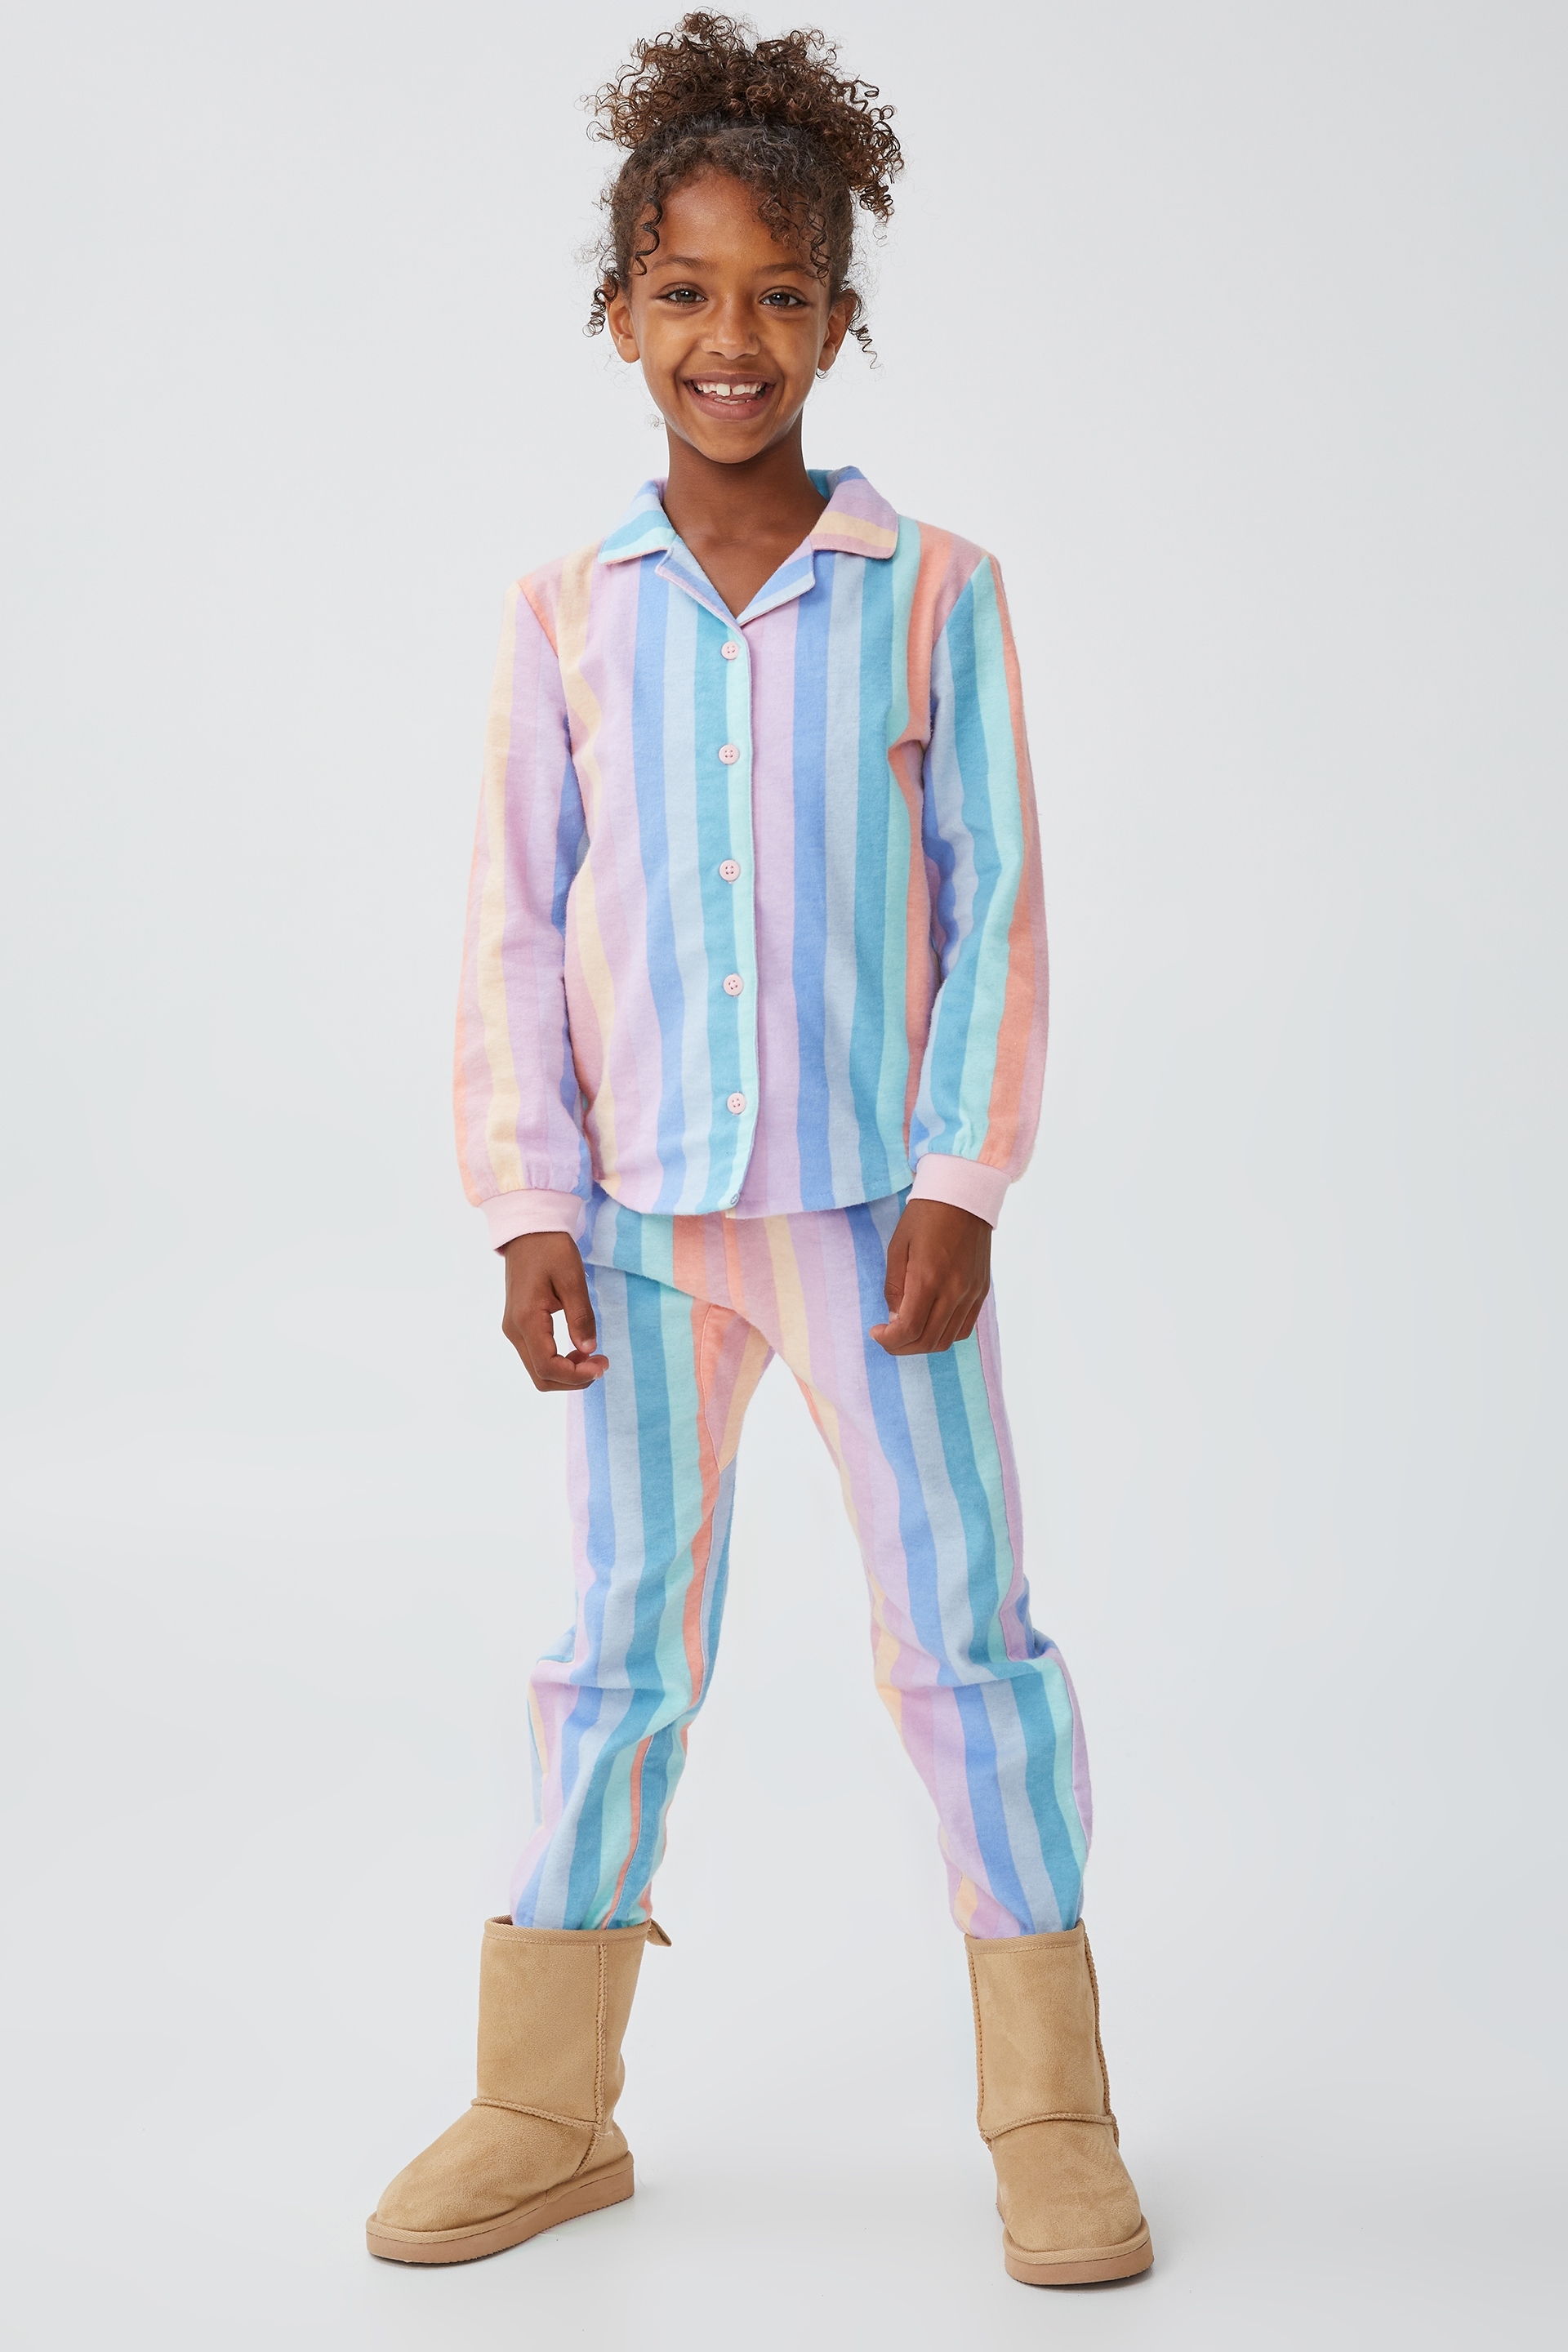 Cotton On Kids - Angie Long Sleeve Pyjama Set - Gelato brighton stripe